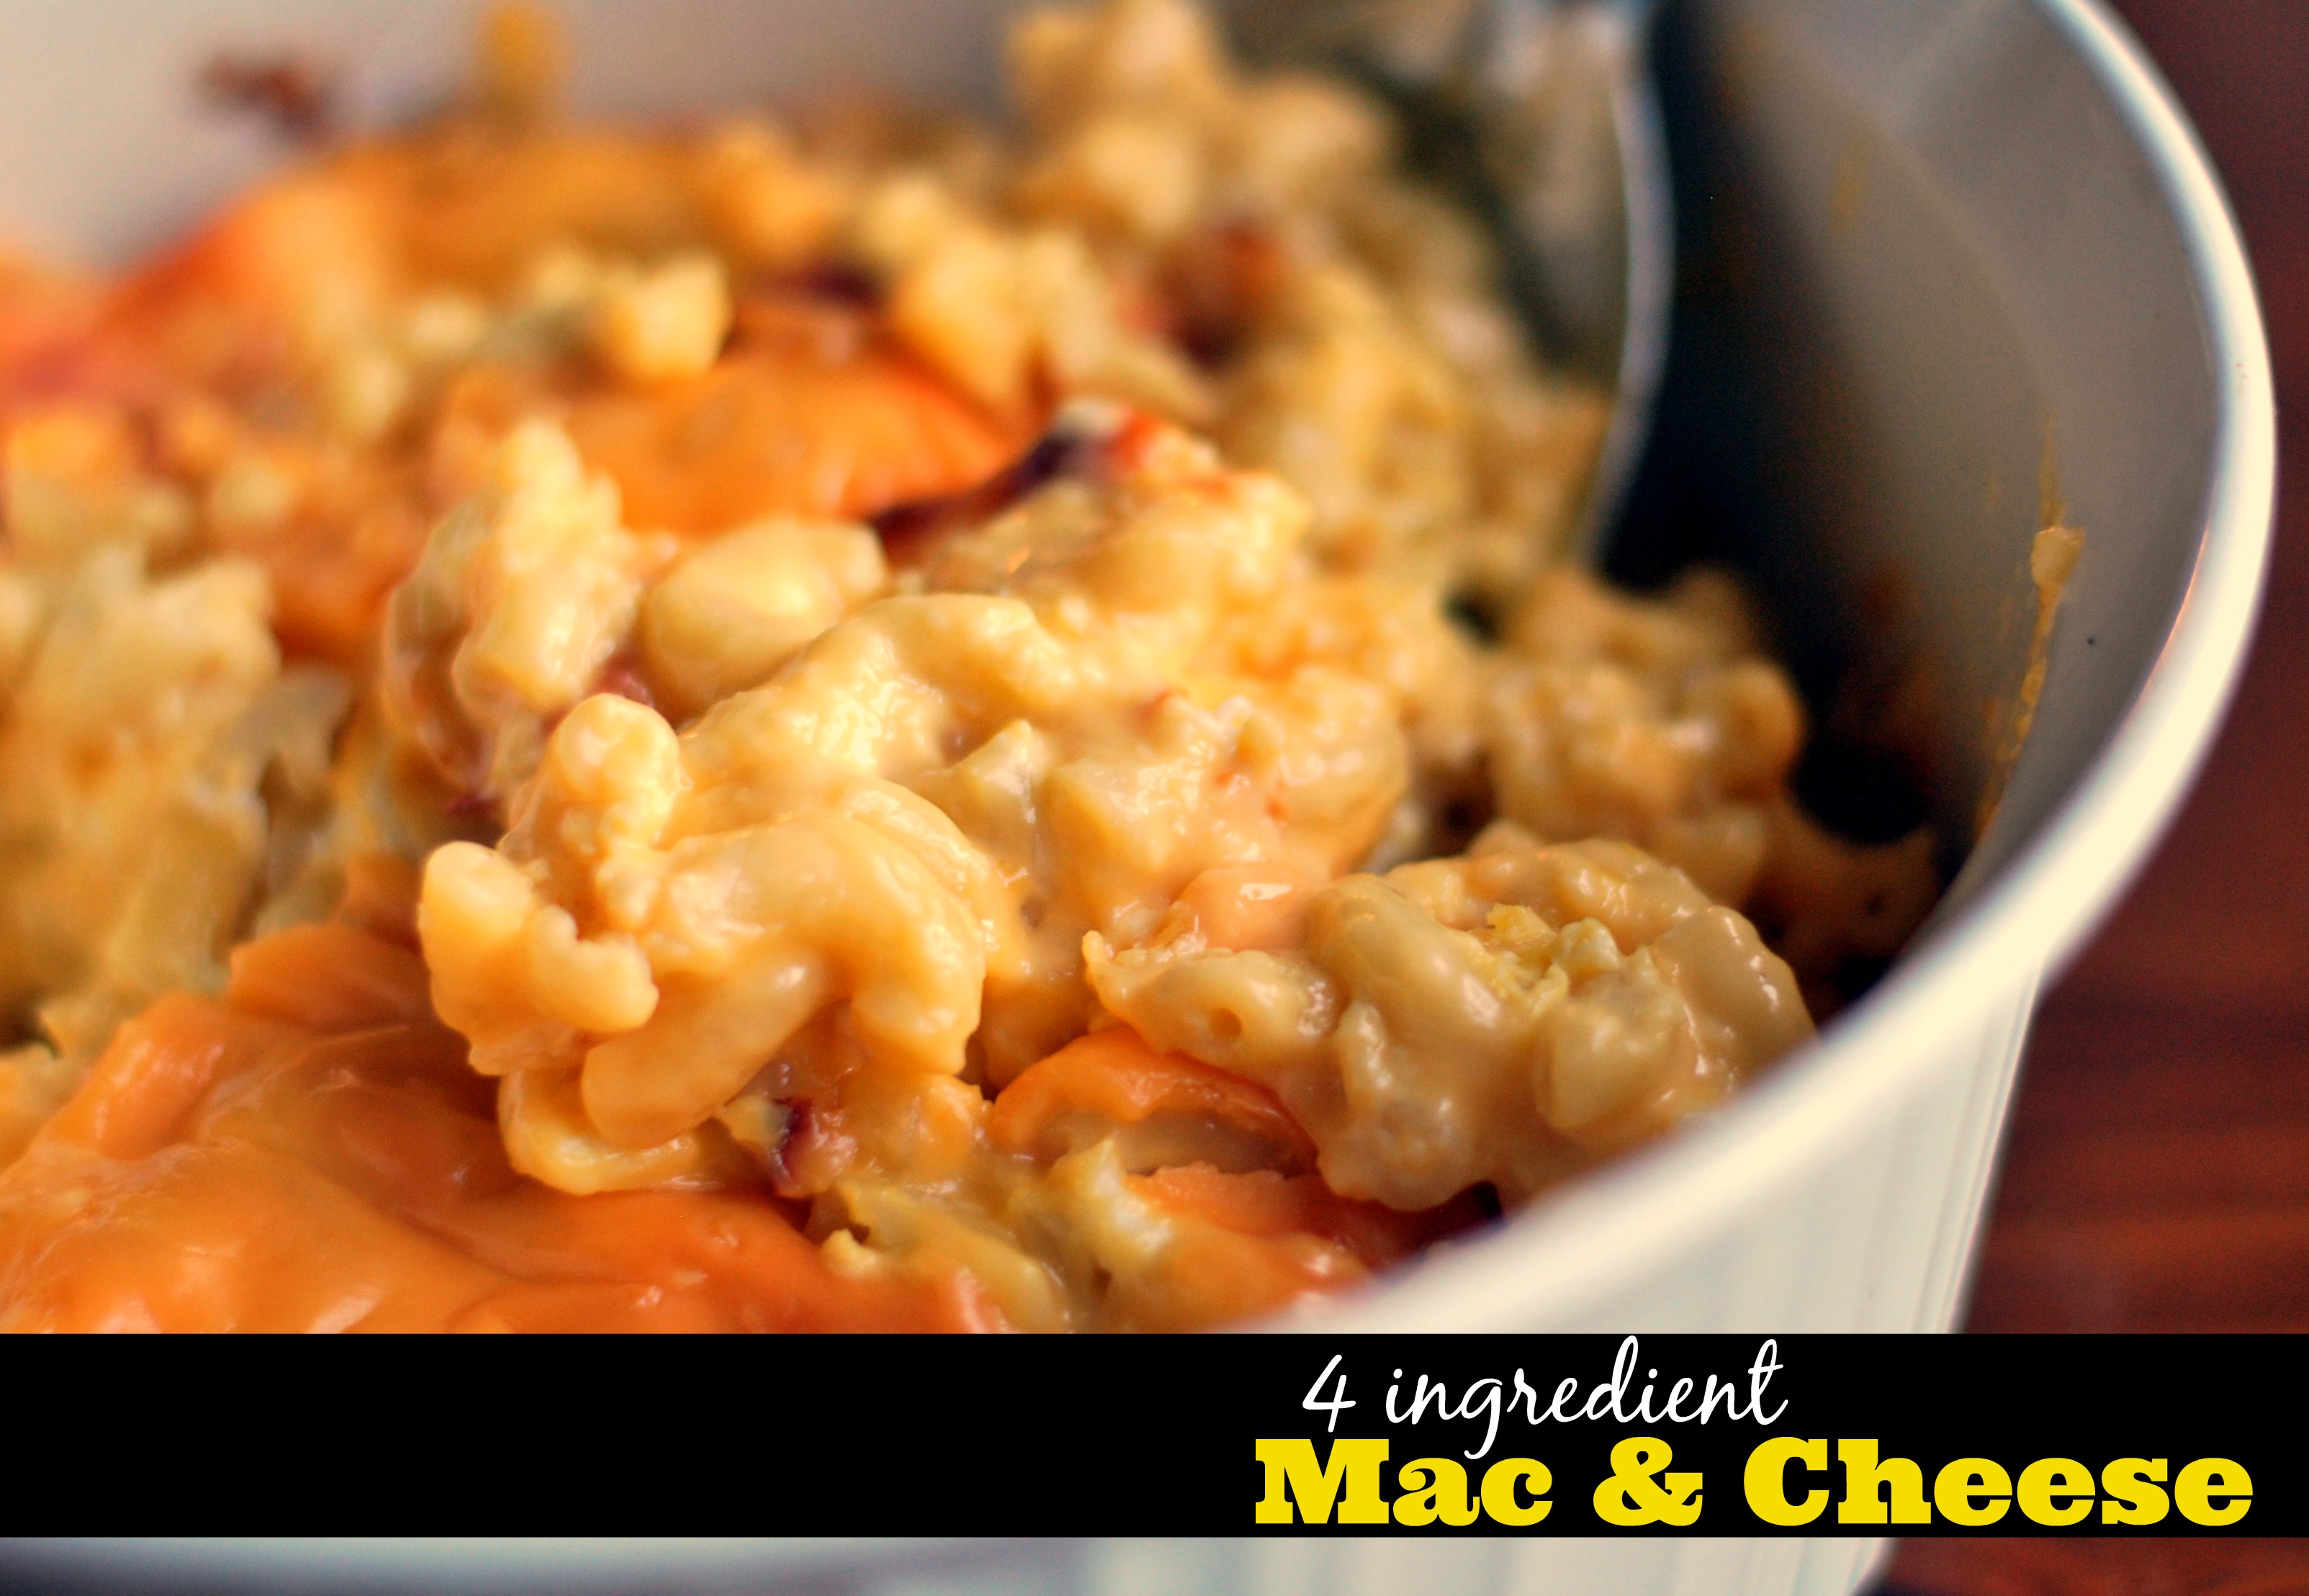 Grandma Mayes’ Mac & Cheese